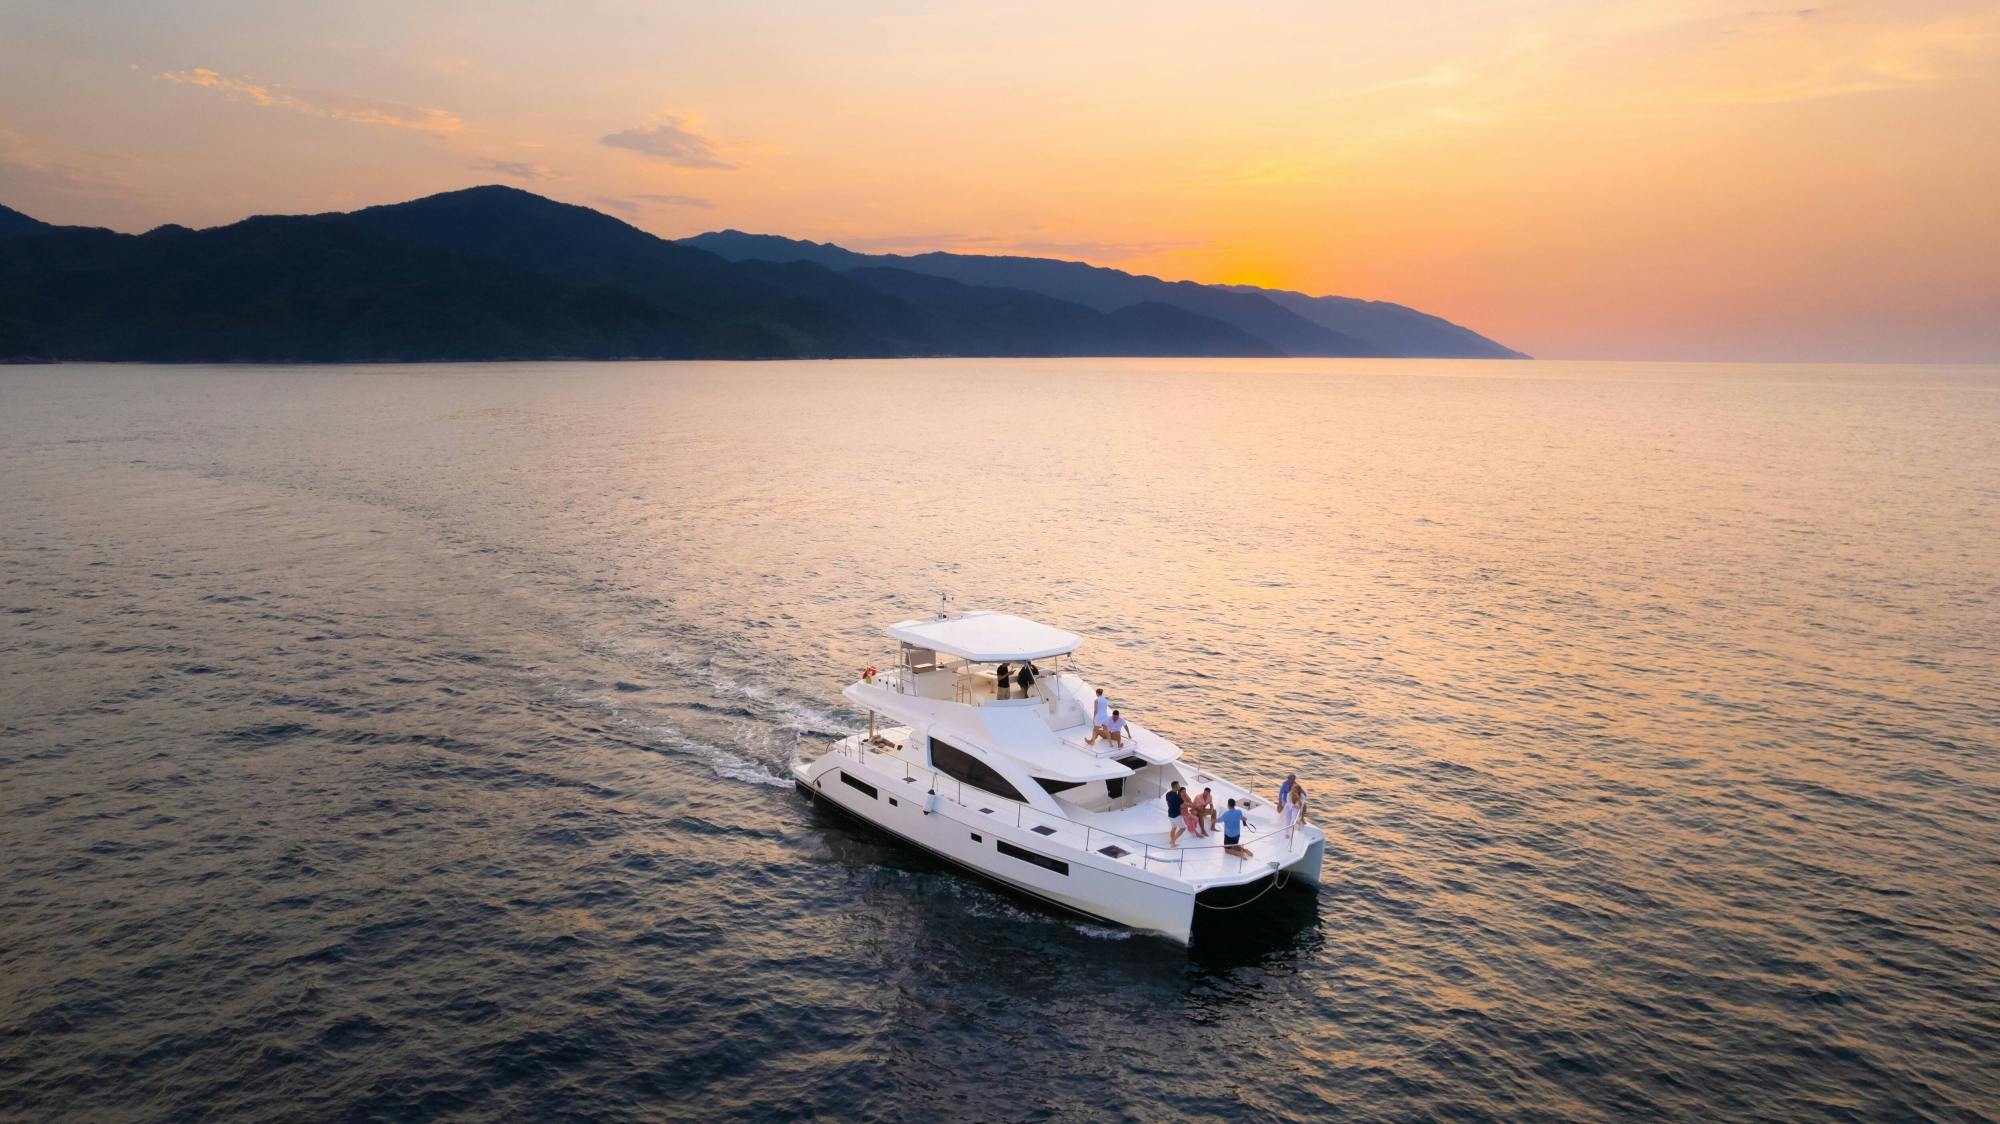 Esperienza di yacht gourmet al tramonto